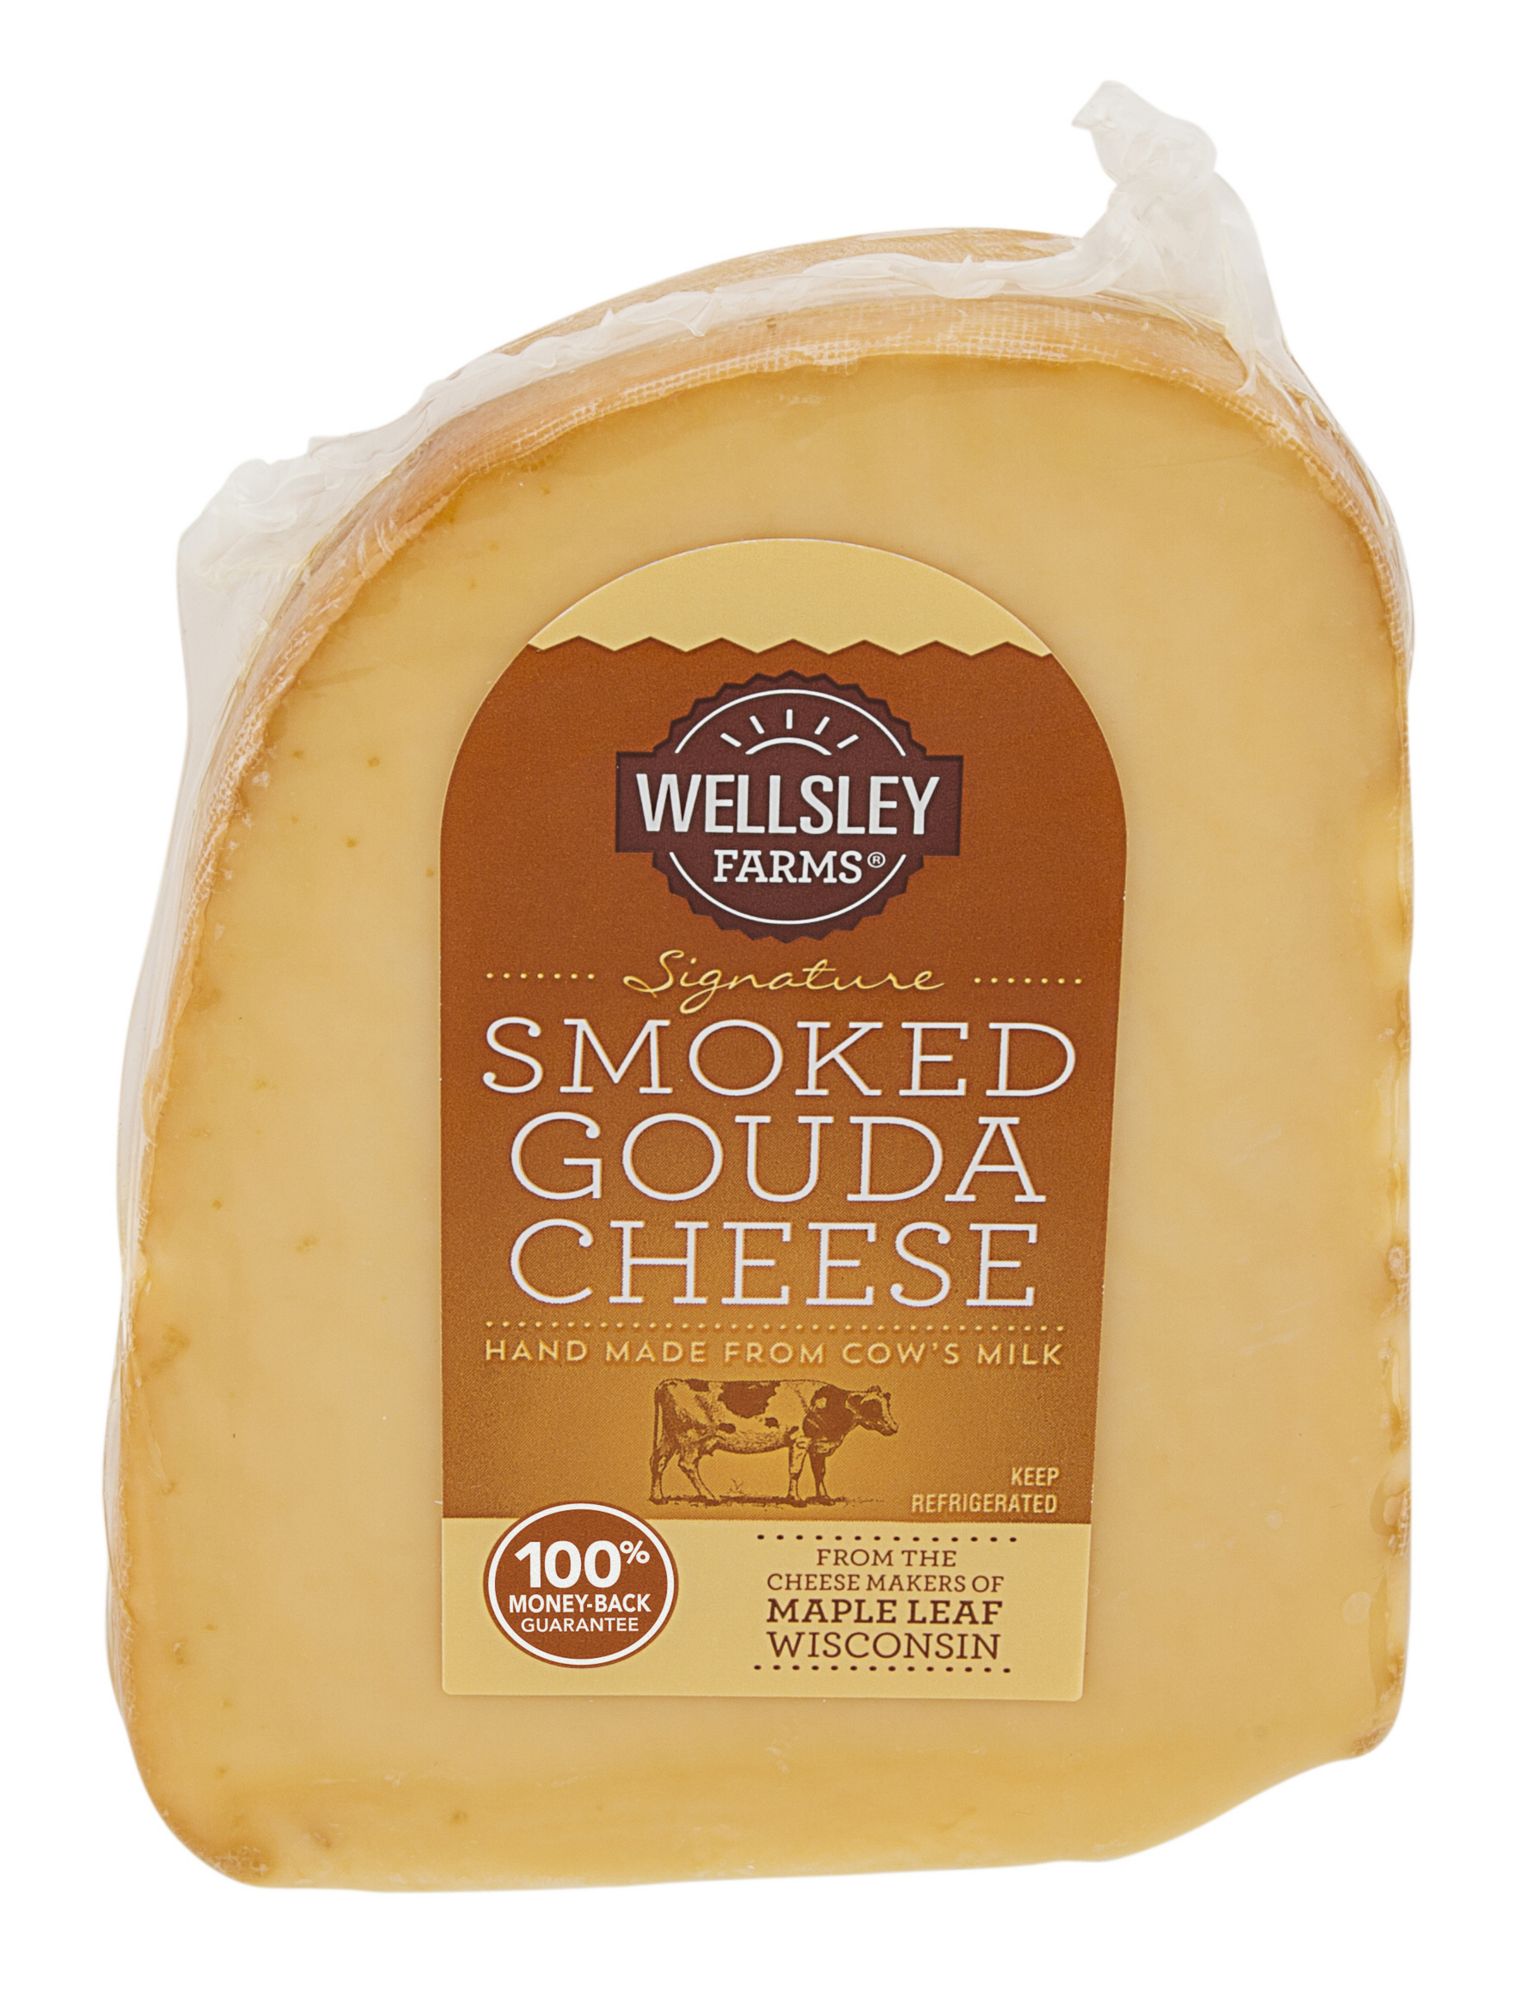 Wellsley Farms Signature Smoked Gouda Cheese, 0.70-1.5 lbs.